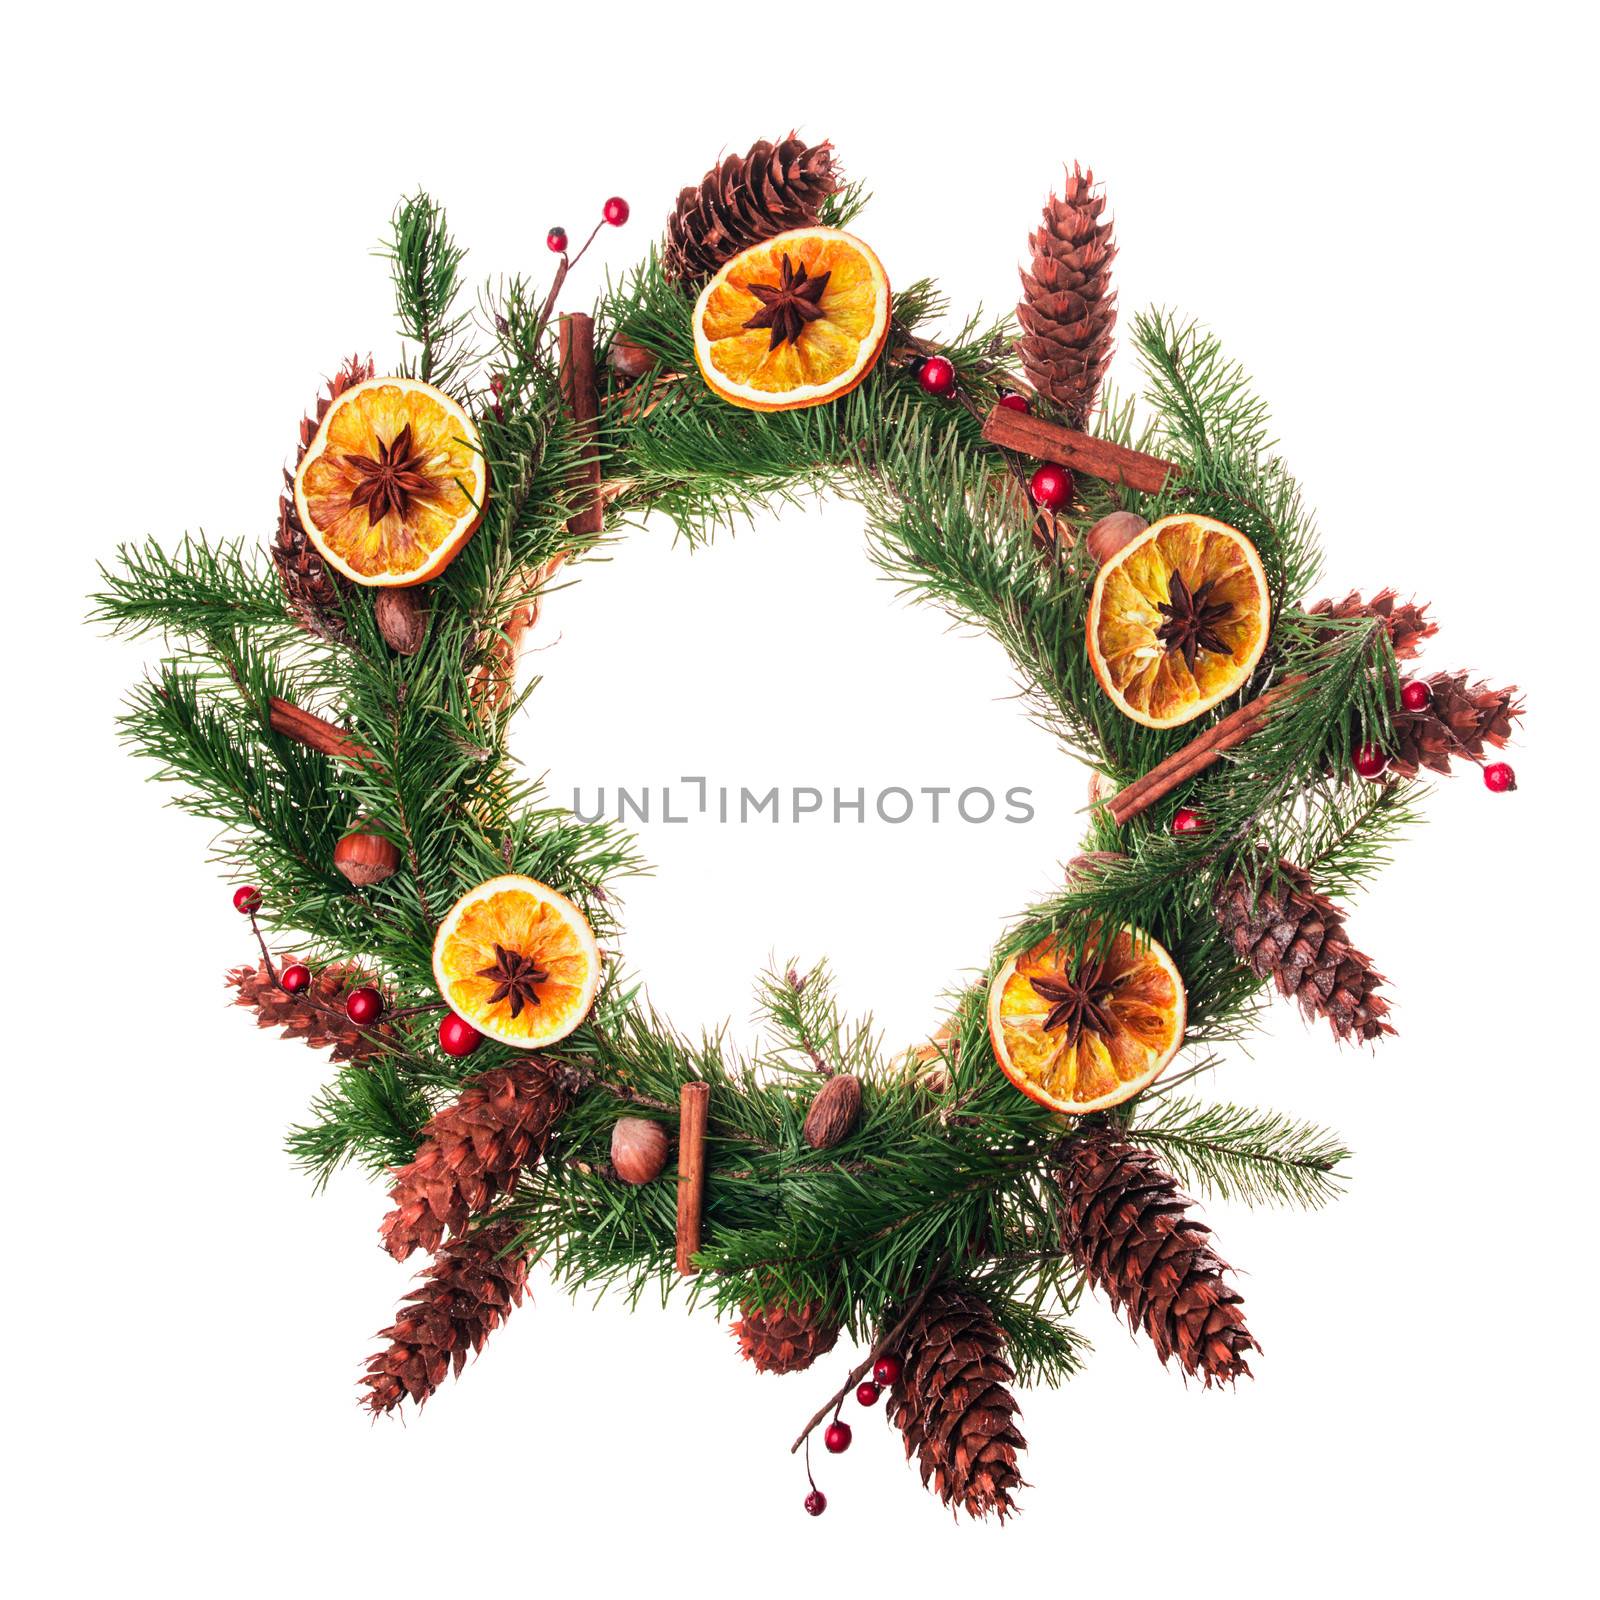 Christmas wreath with dry orange slices and cinnamon sticks